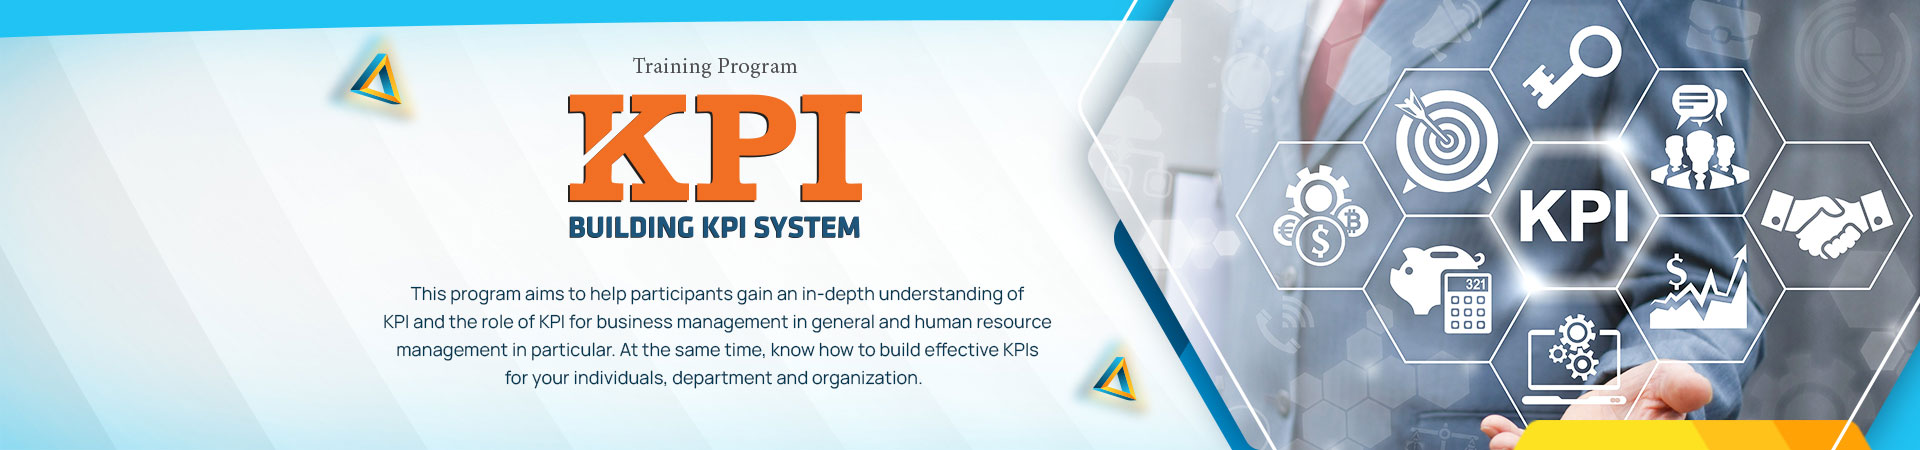 KPI - Building KPI System